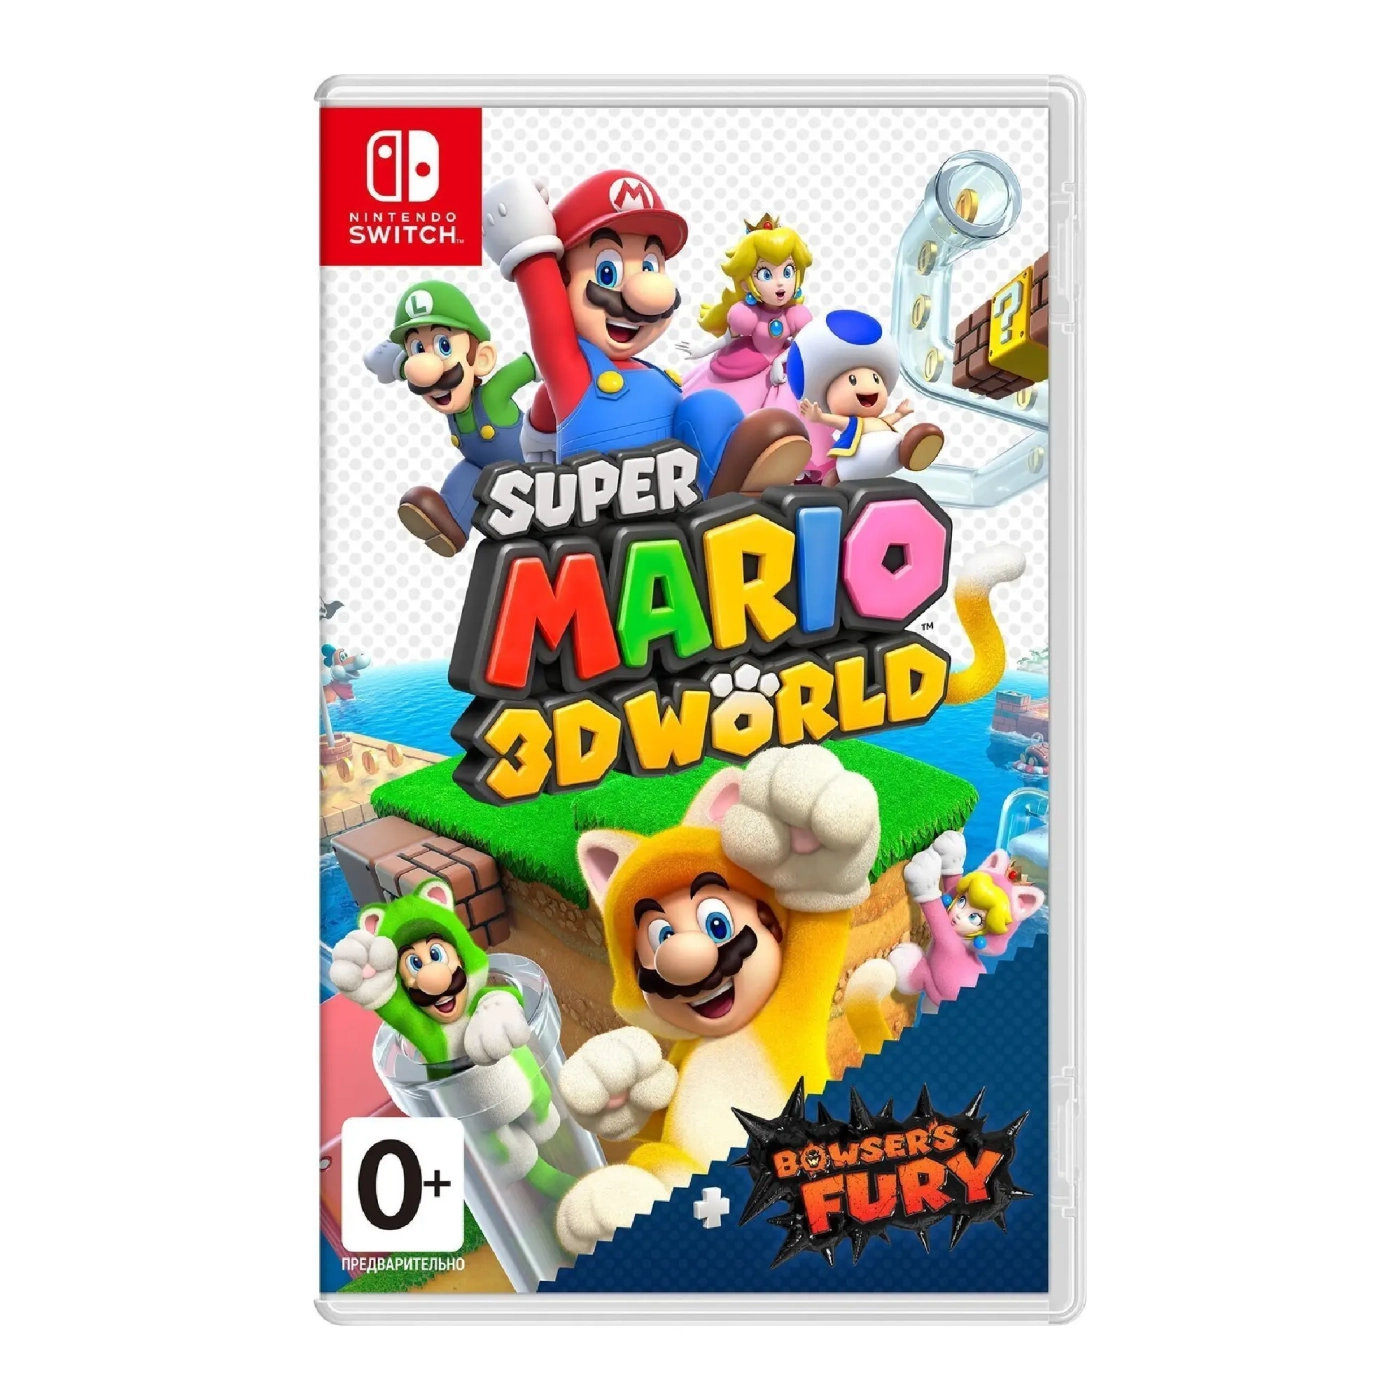 Купити Гра Nintendo Super Mario 3D World + Bowser's Fury, картридж (045496426972) - фото 1